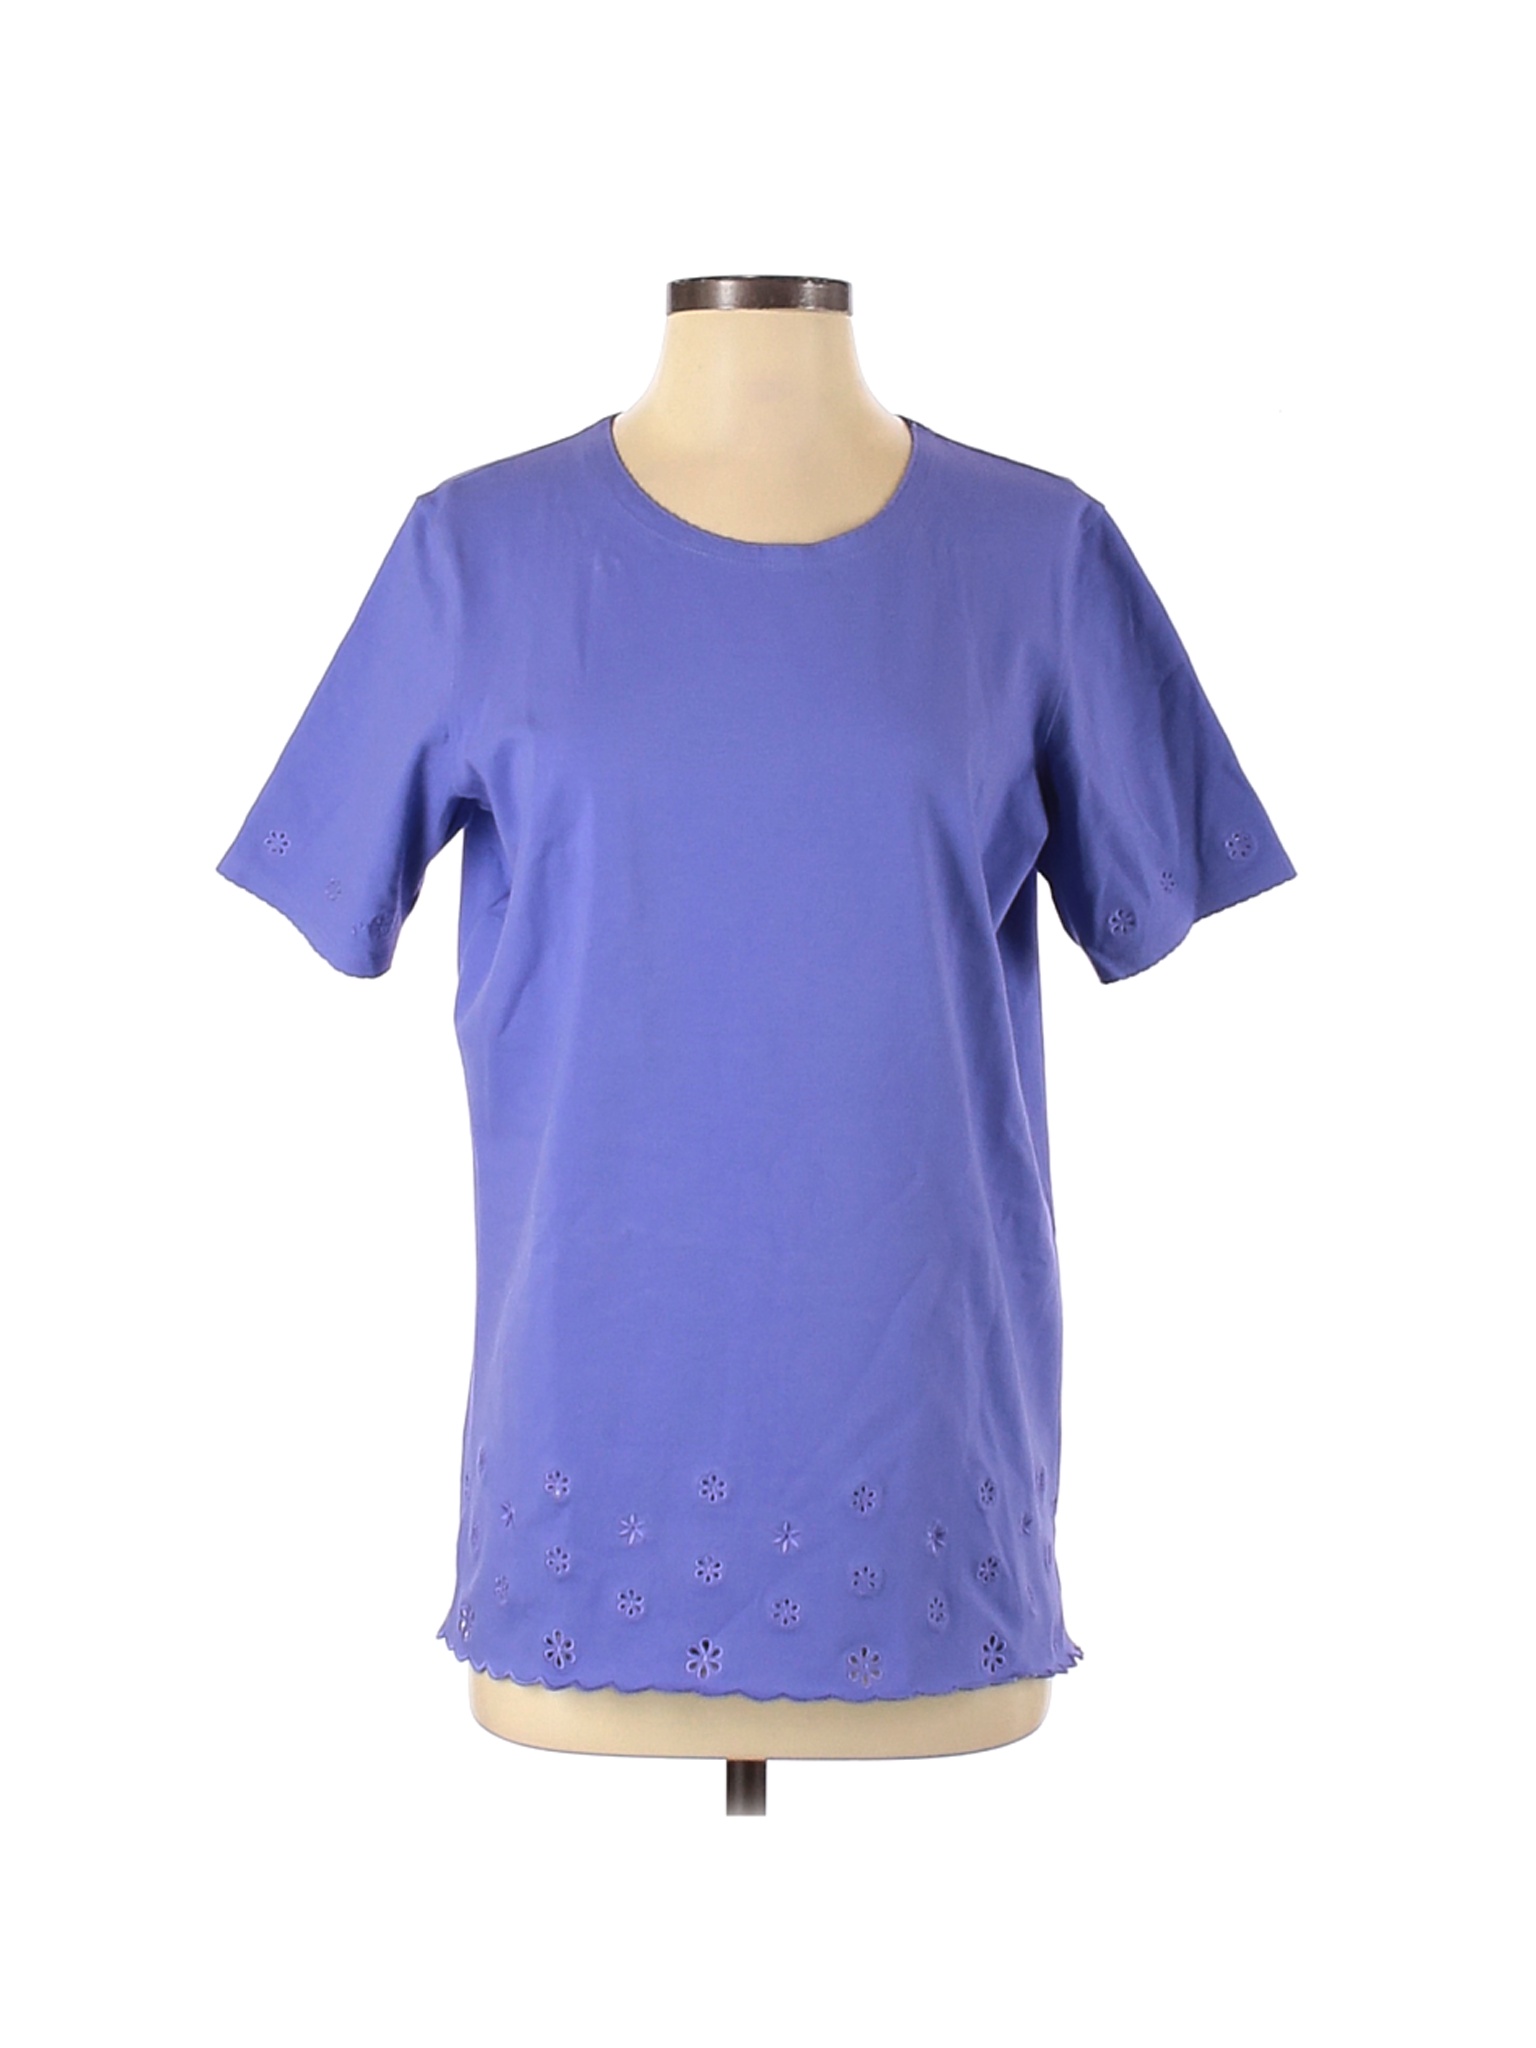 Denim Co Women Purple Short Sleeve T-Shirt S | eBay